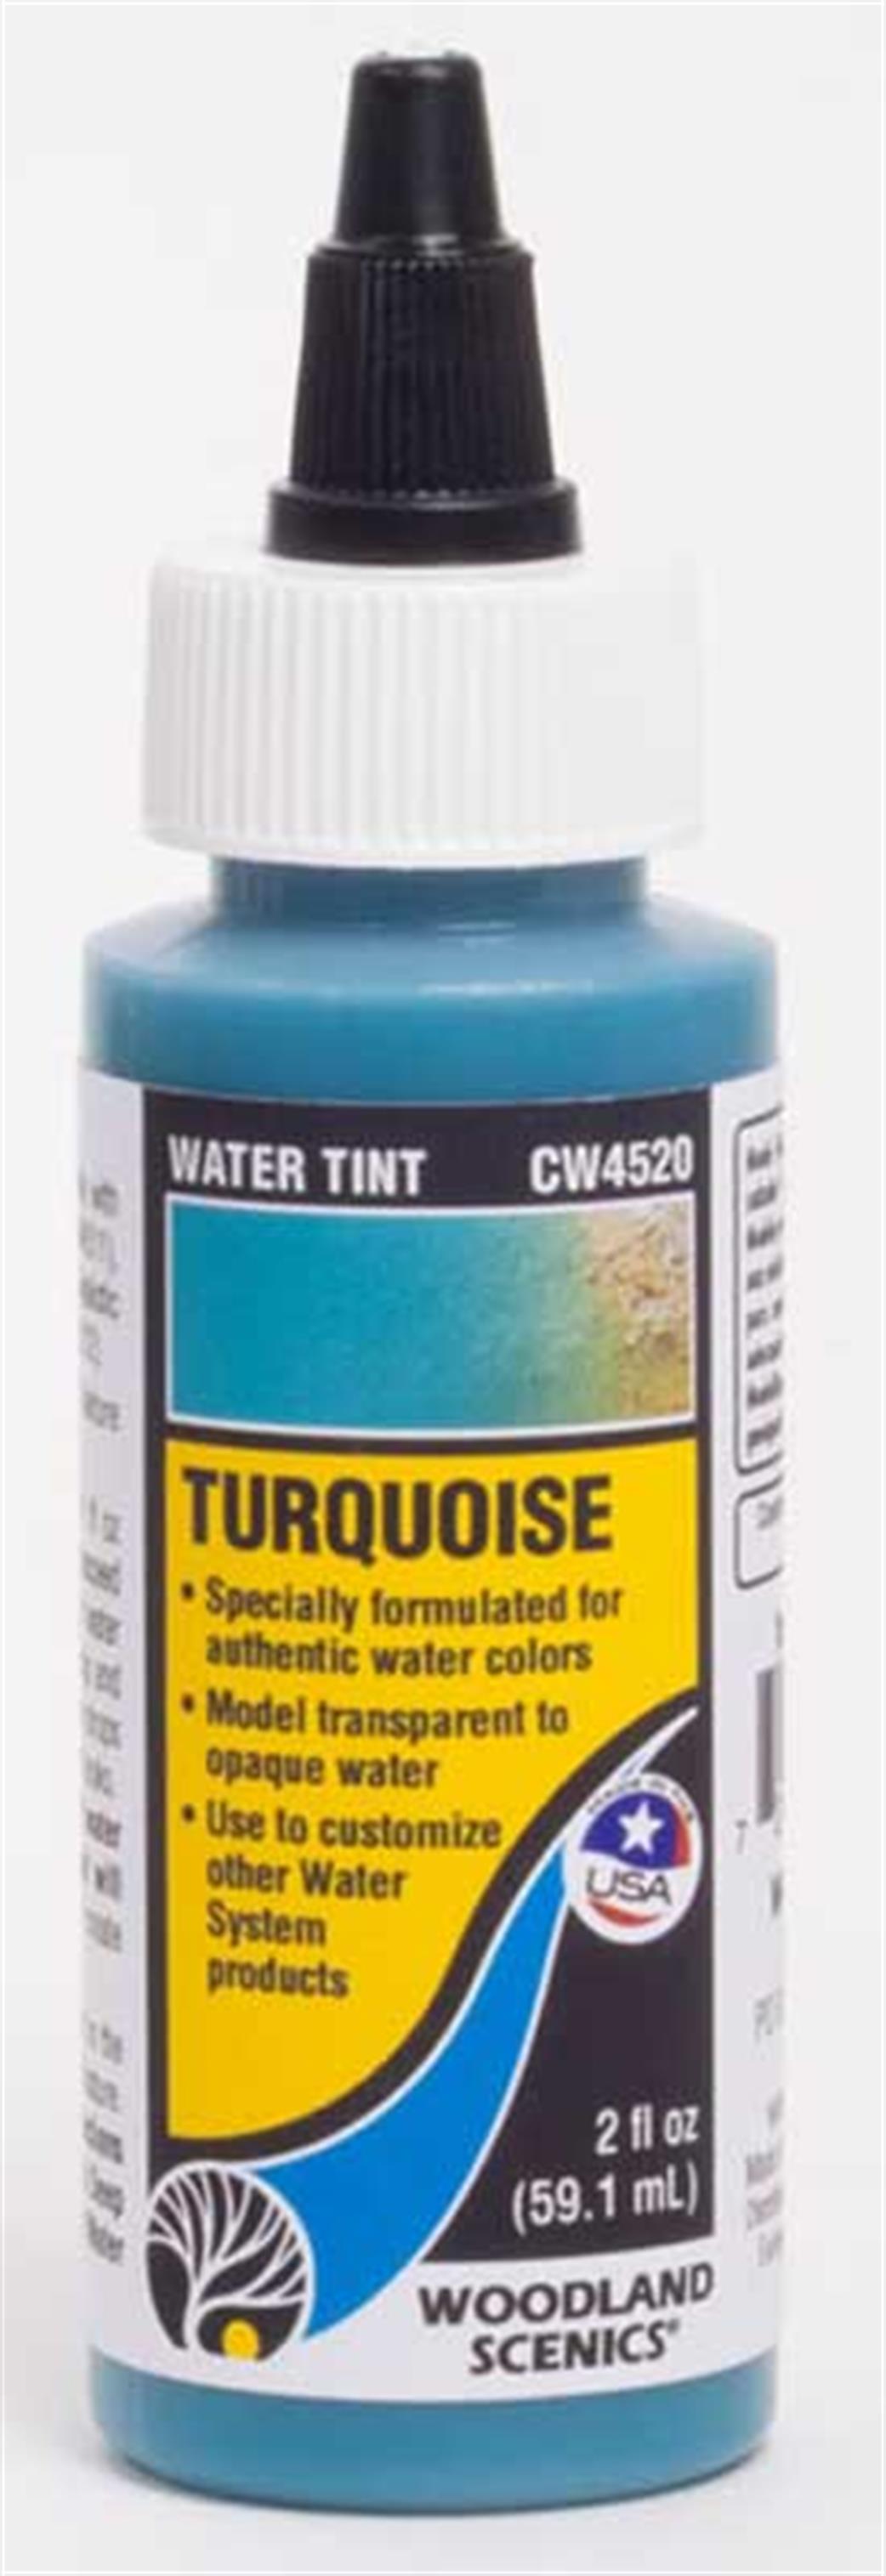 Woodland Scenics CW4520 Turquoise Water Tint